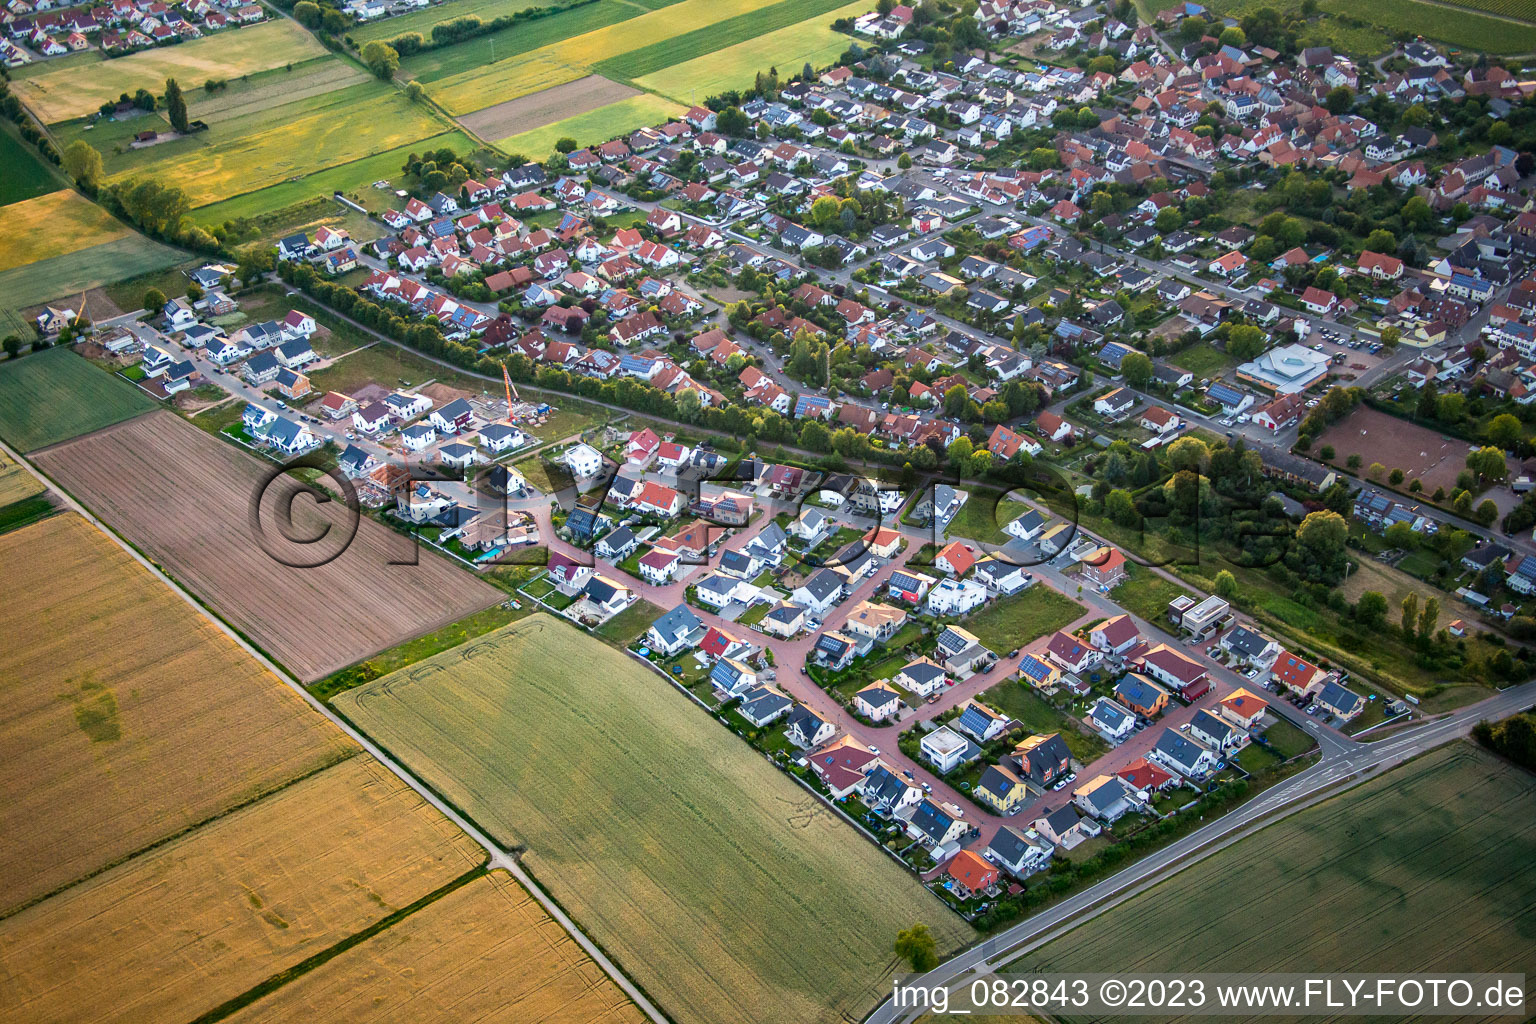 New development area Am Steinsteg, Trifelsblick in Bornheim in the state Rhineland-Palatinate, Germany